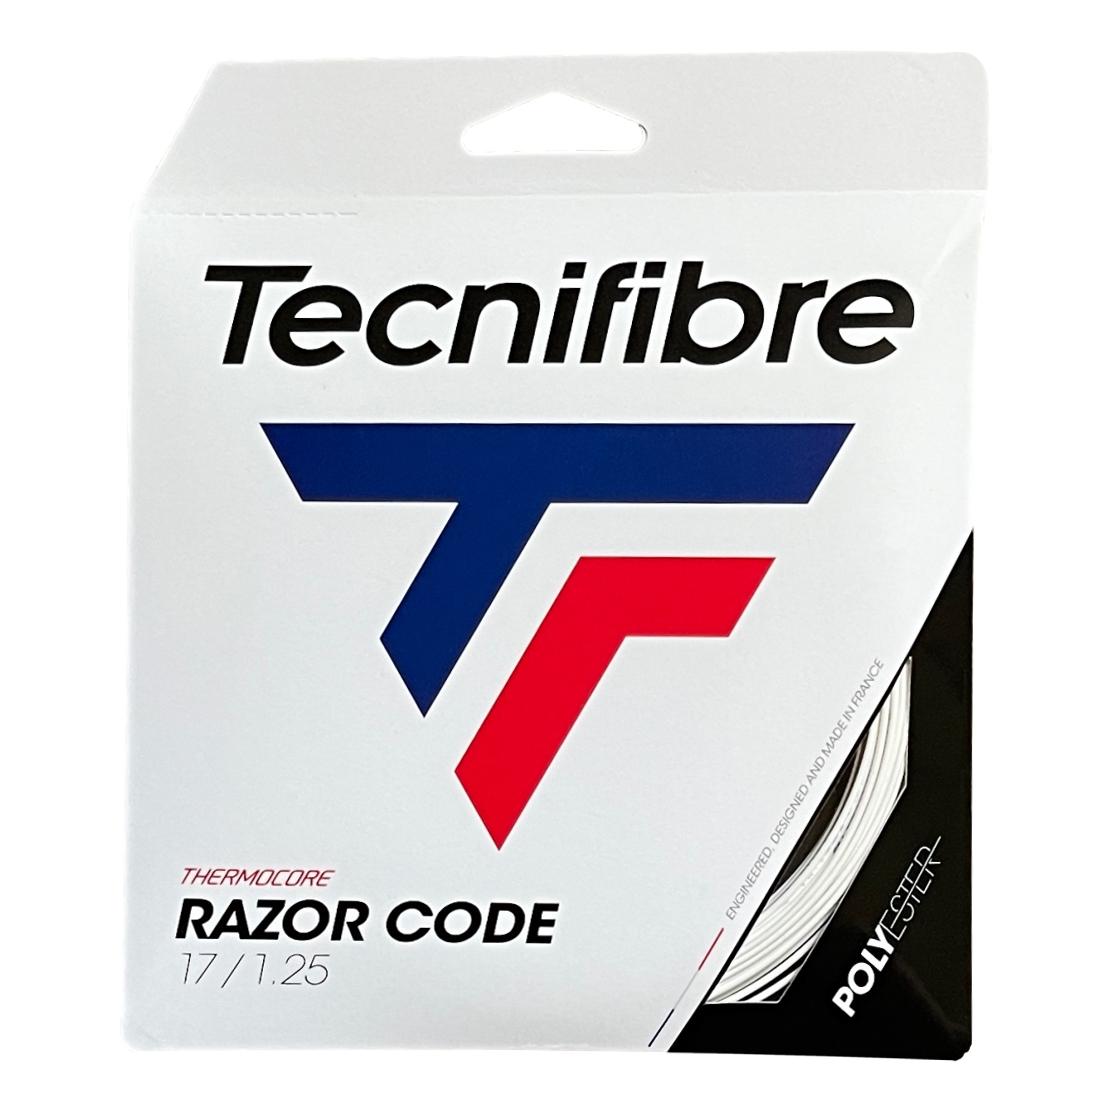 Full view of the white Tecnifibre Razor Code 17 Tennis String